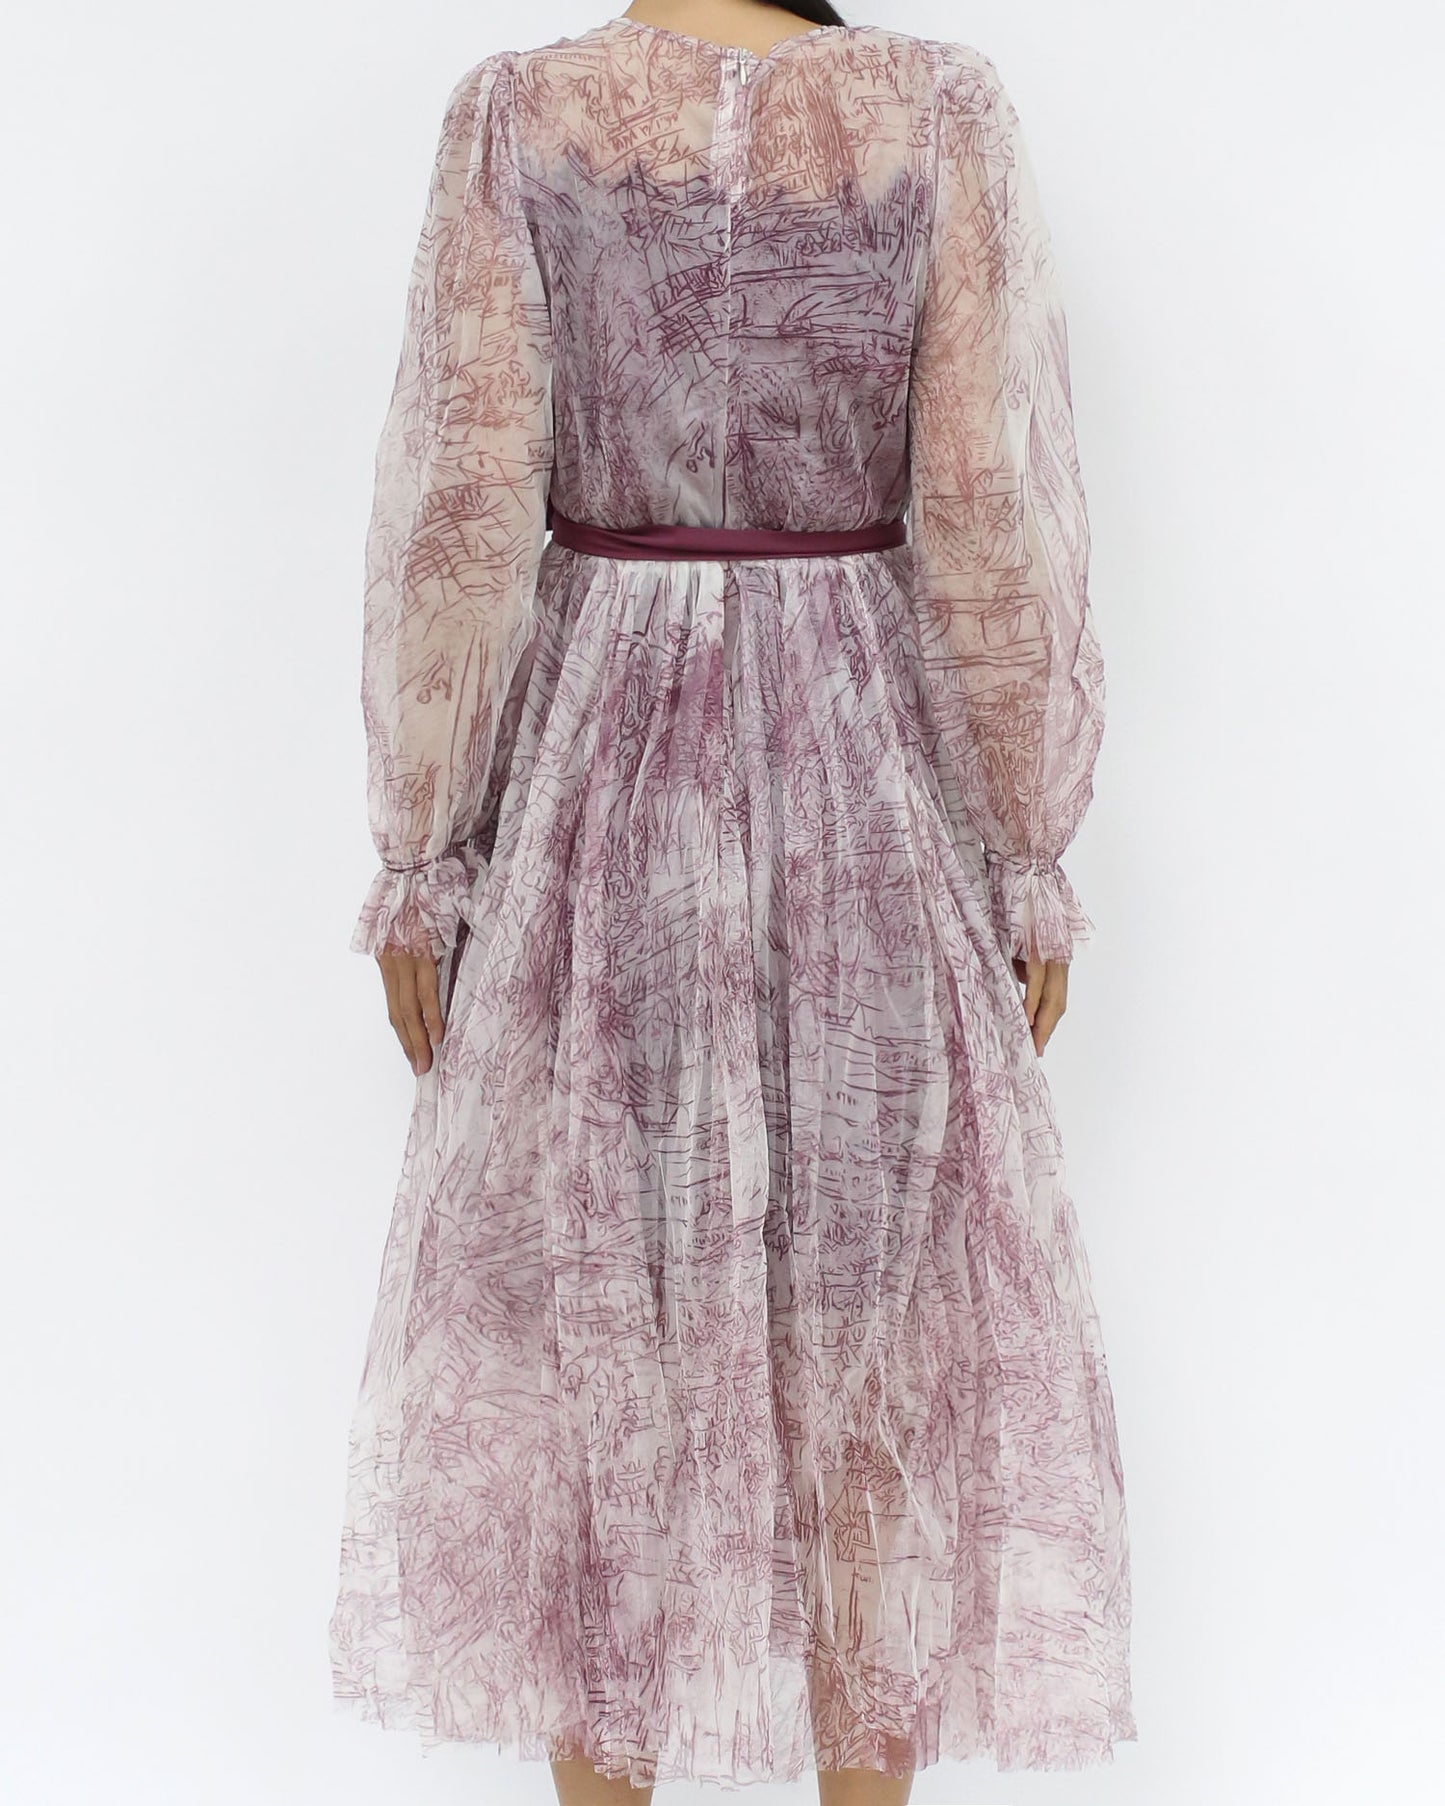 burgundy printed mesh layers dress w/ ribbon belt